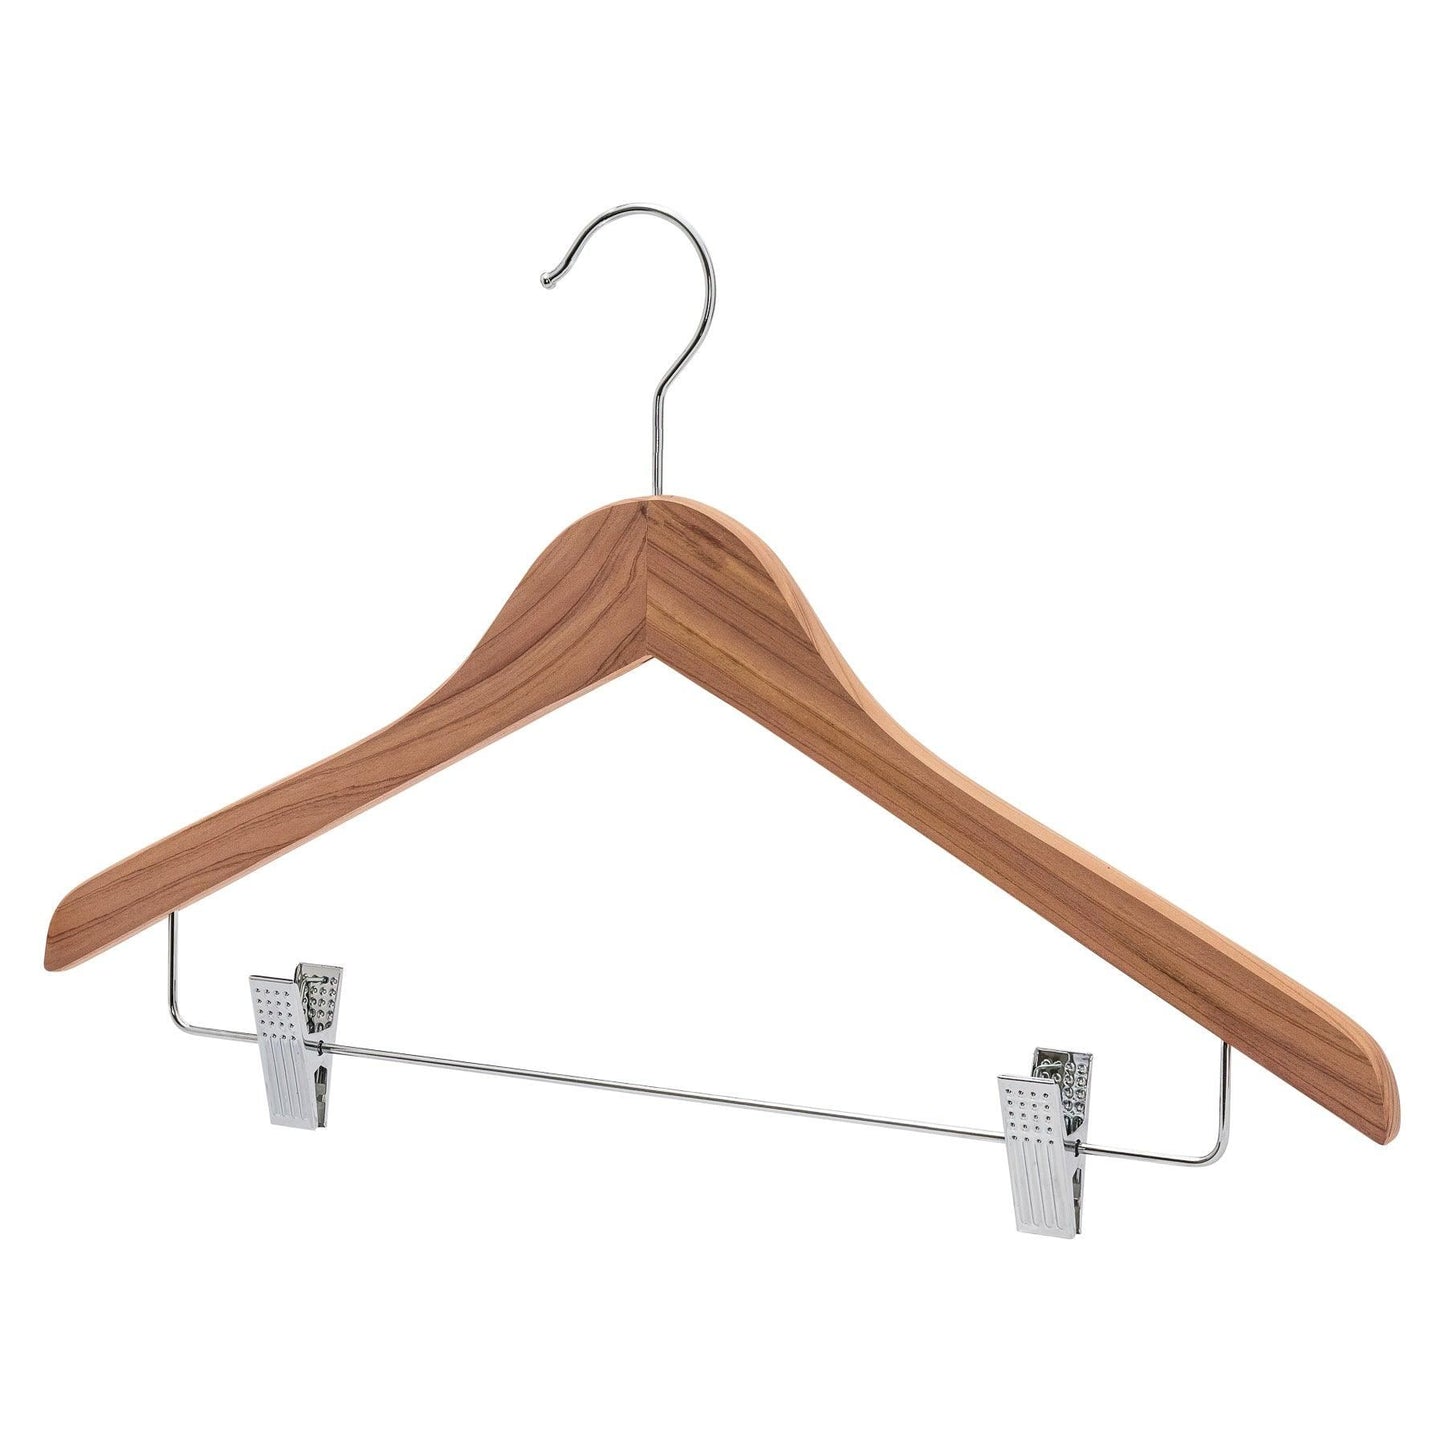 Premium Red Cedar Combination Hanger With Clips - 43cm X 12mm Thick (Sold in Bundles of 10/25/50) - Hangersforless